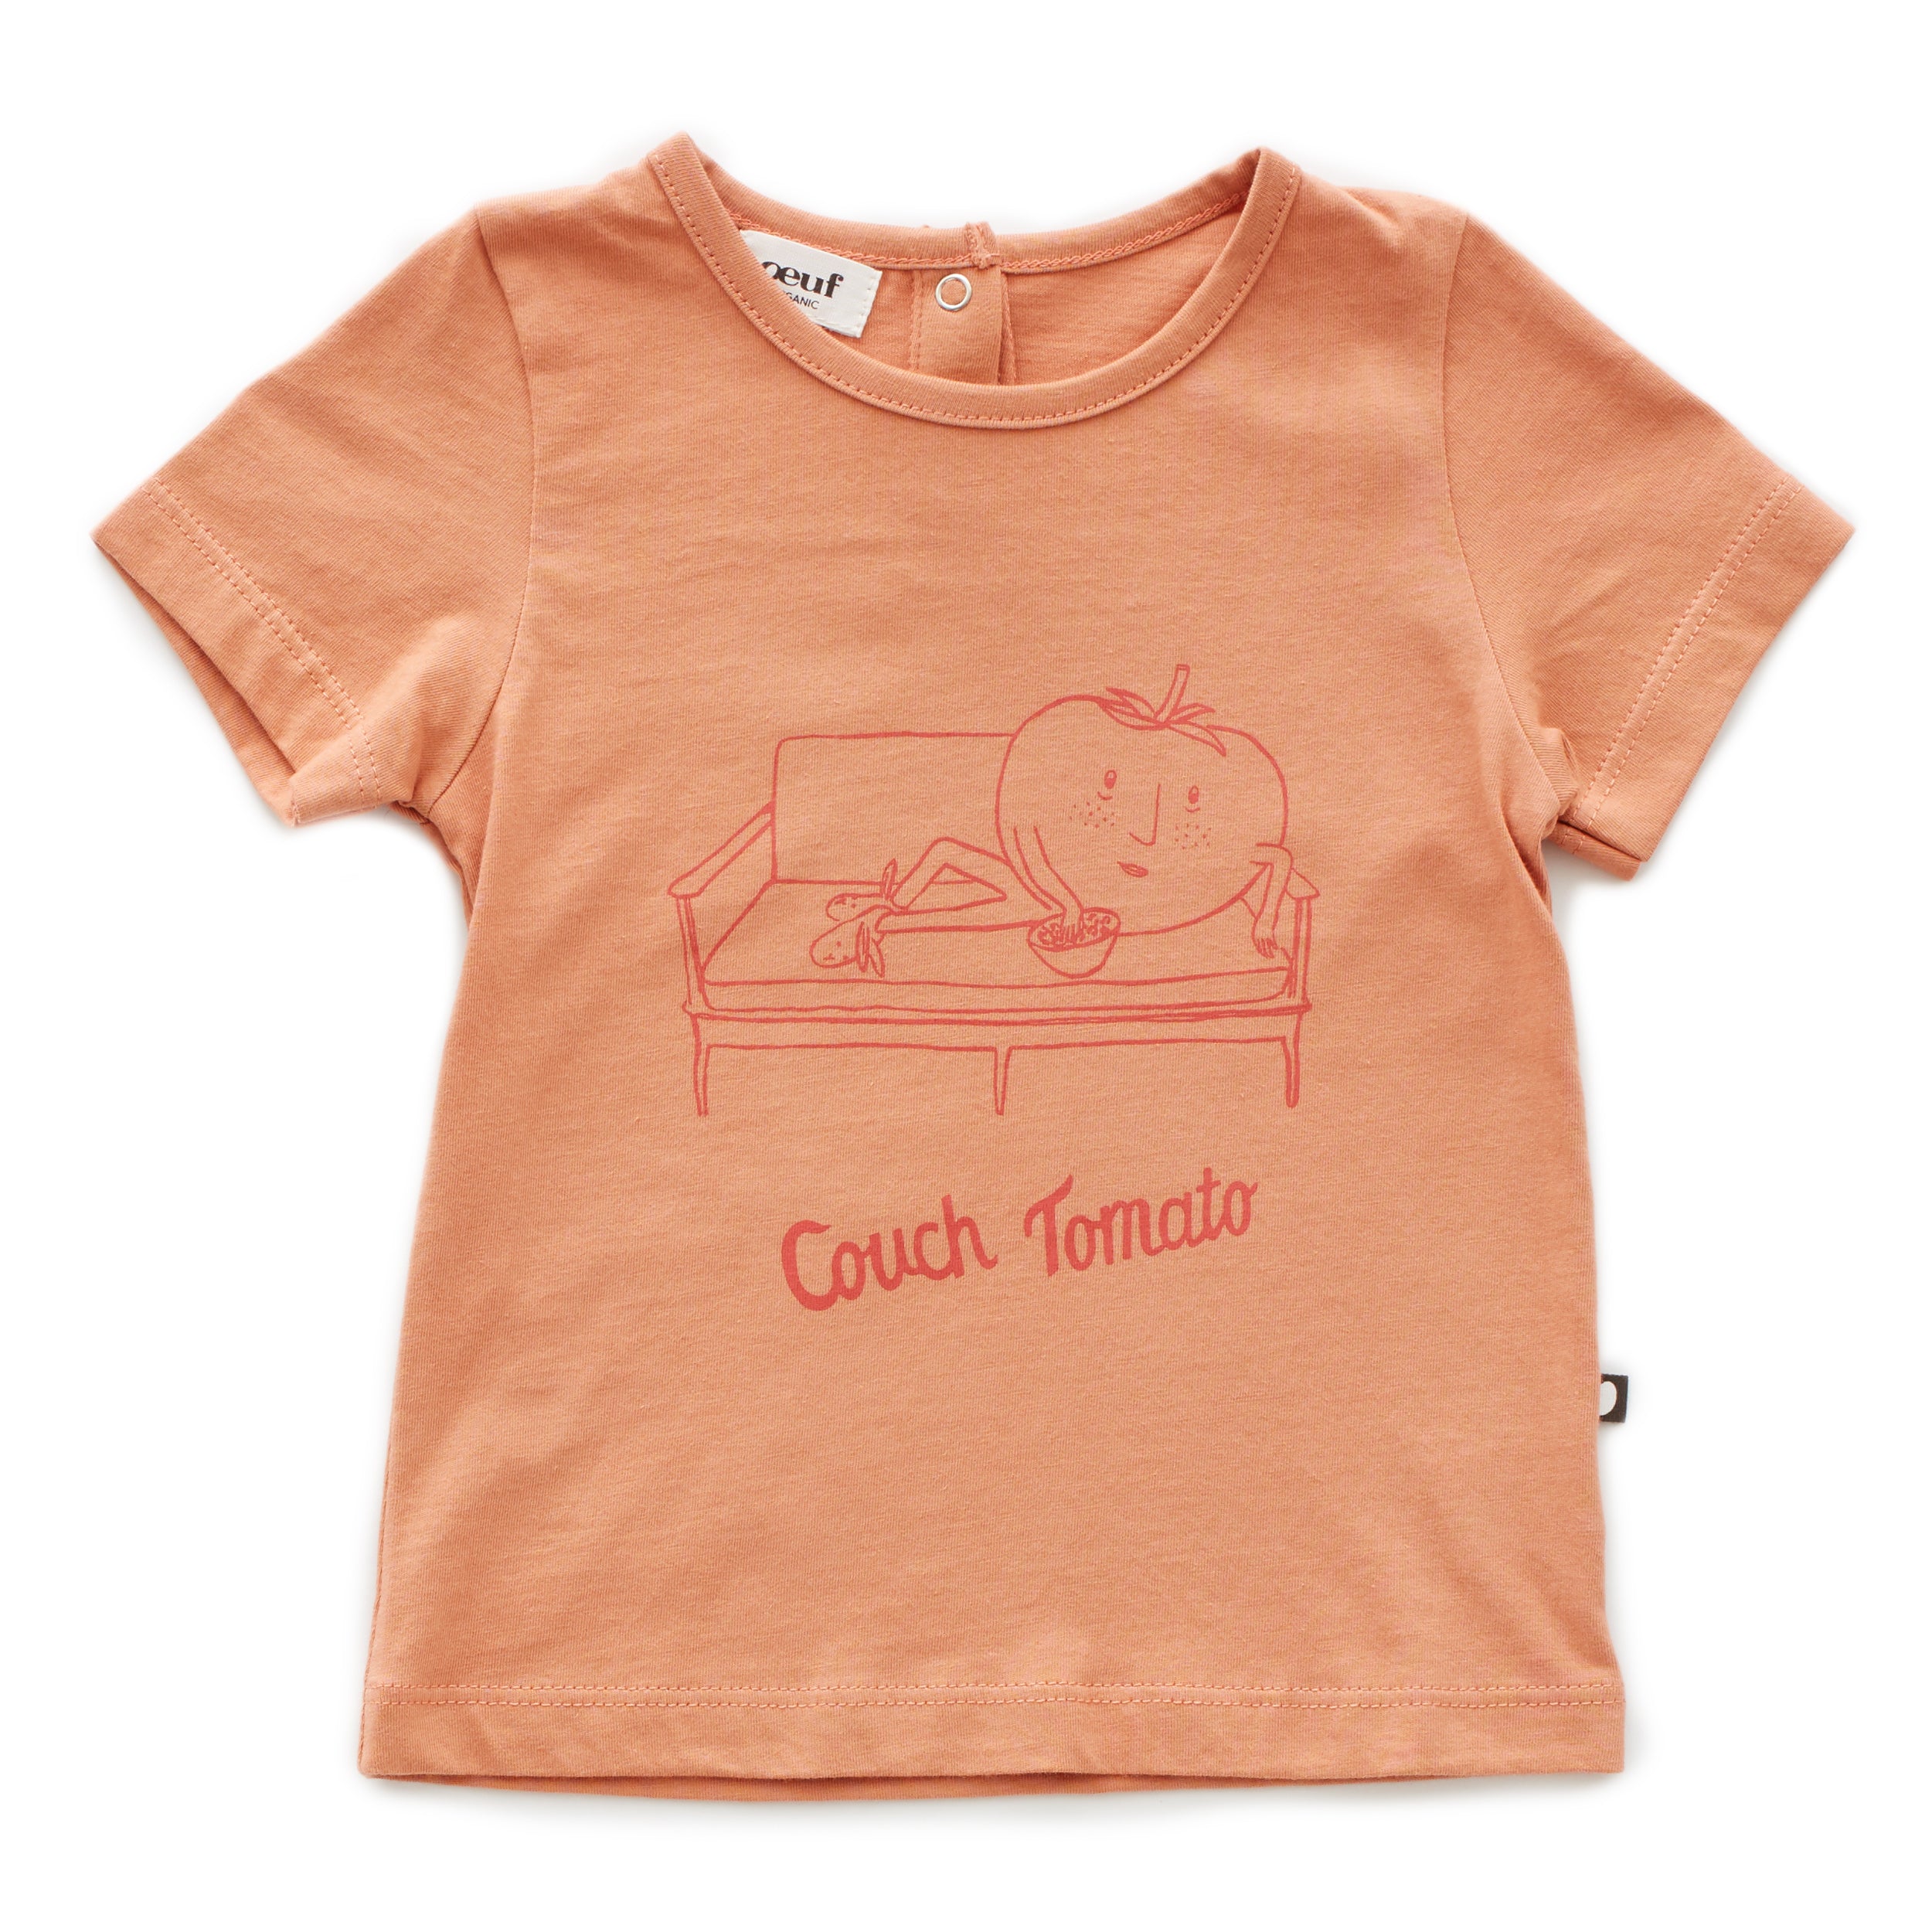 Boys & Girls Orange Cotton T-shirt